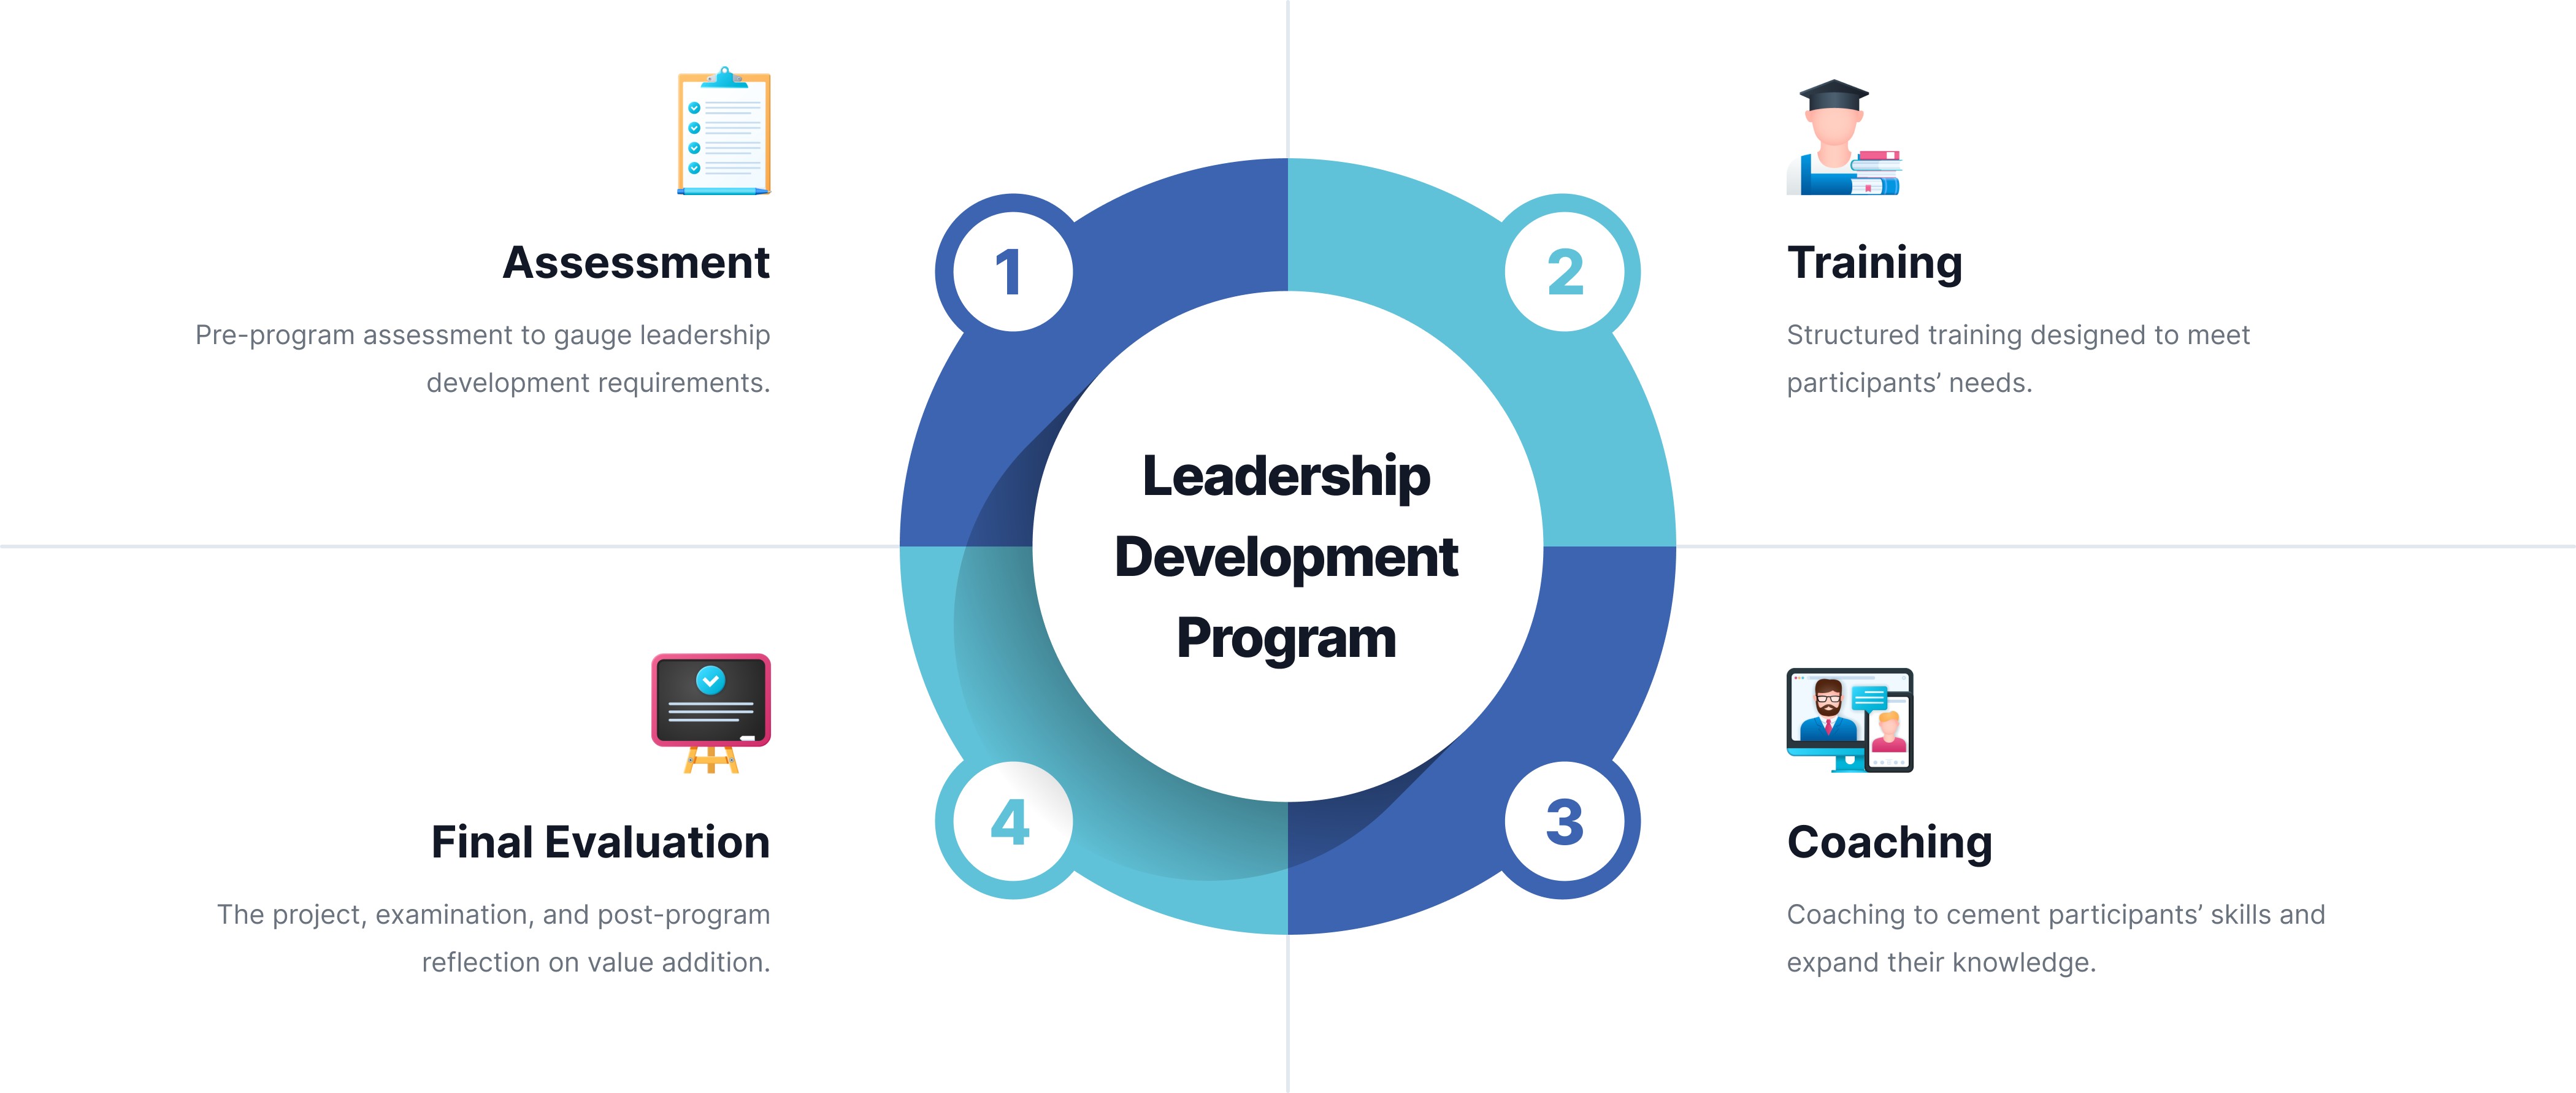 leadership development homework